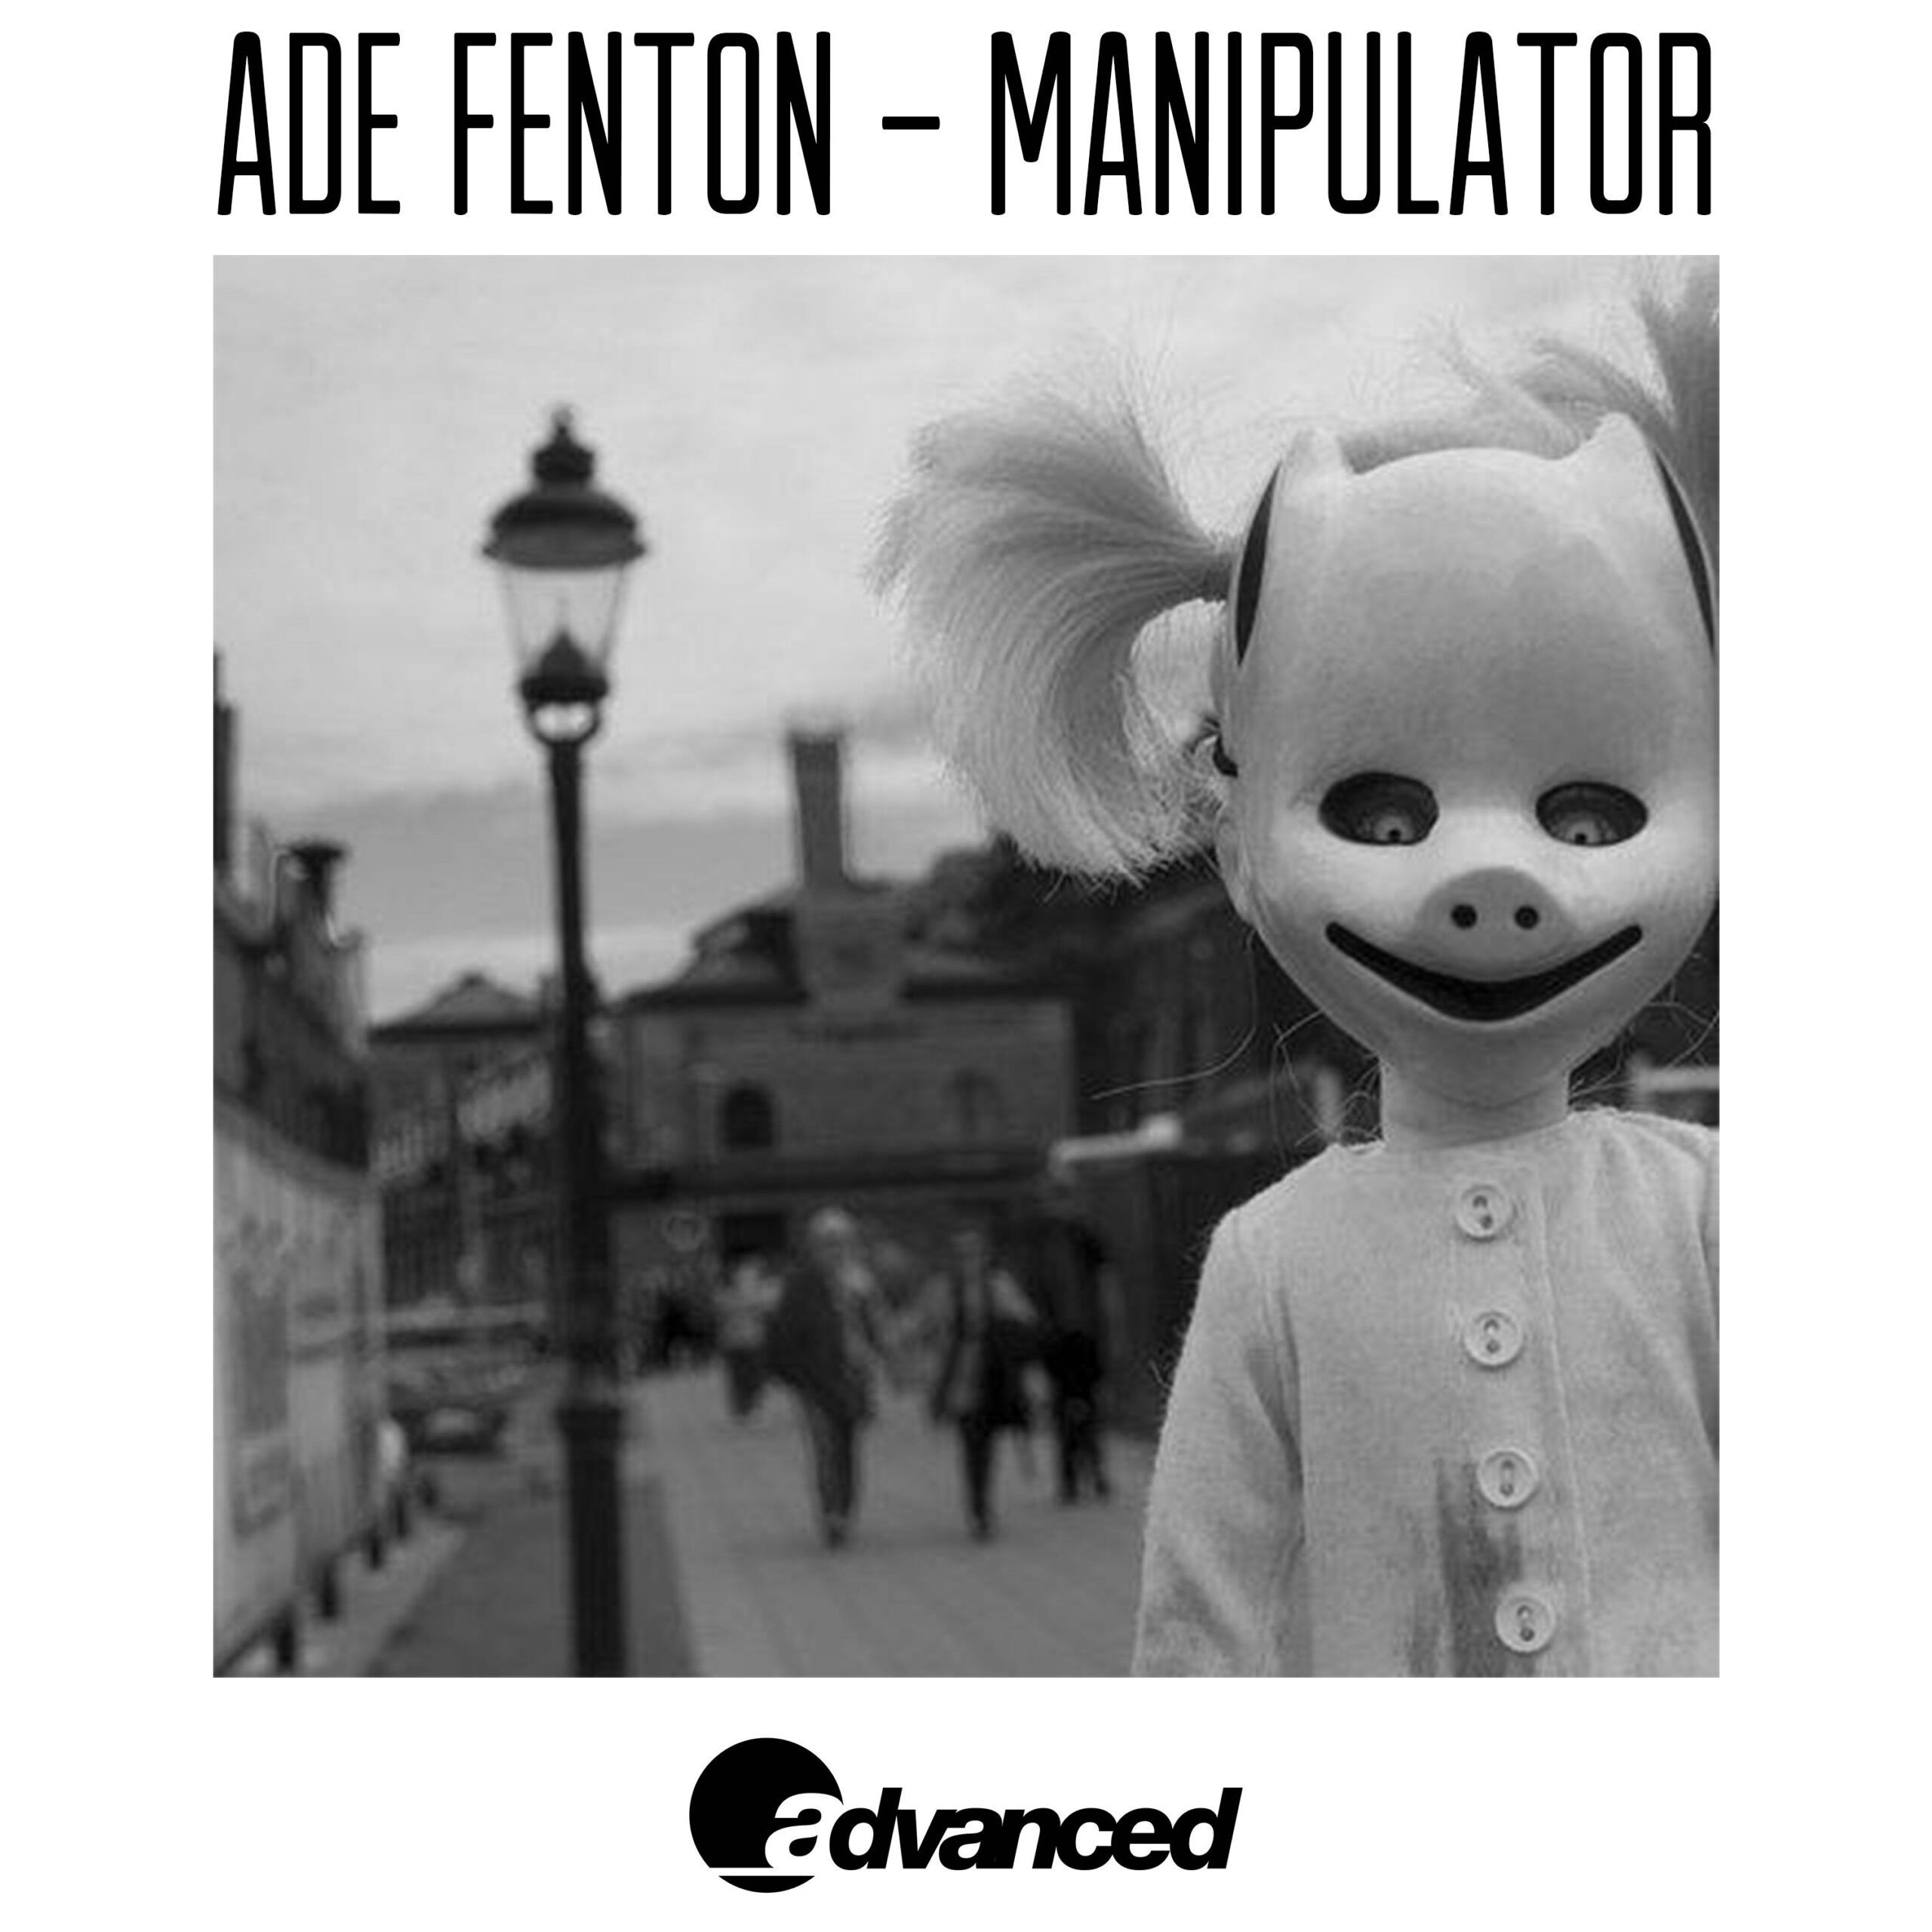 adefenton_manipulator_artwork_web.jpg